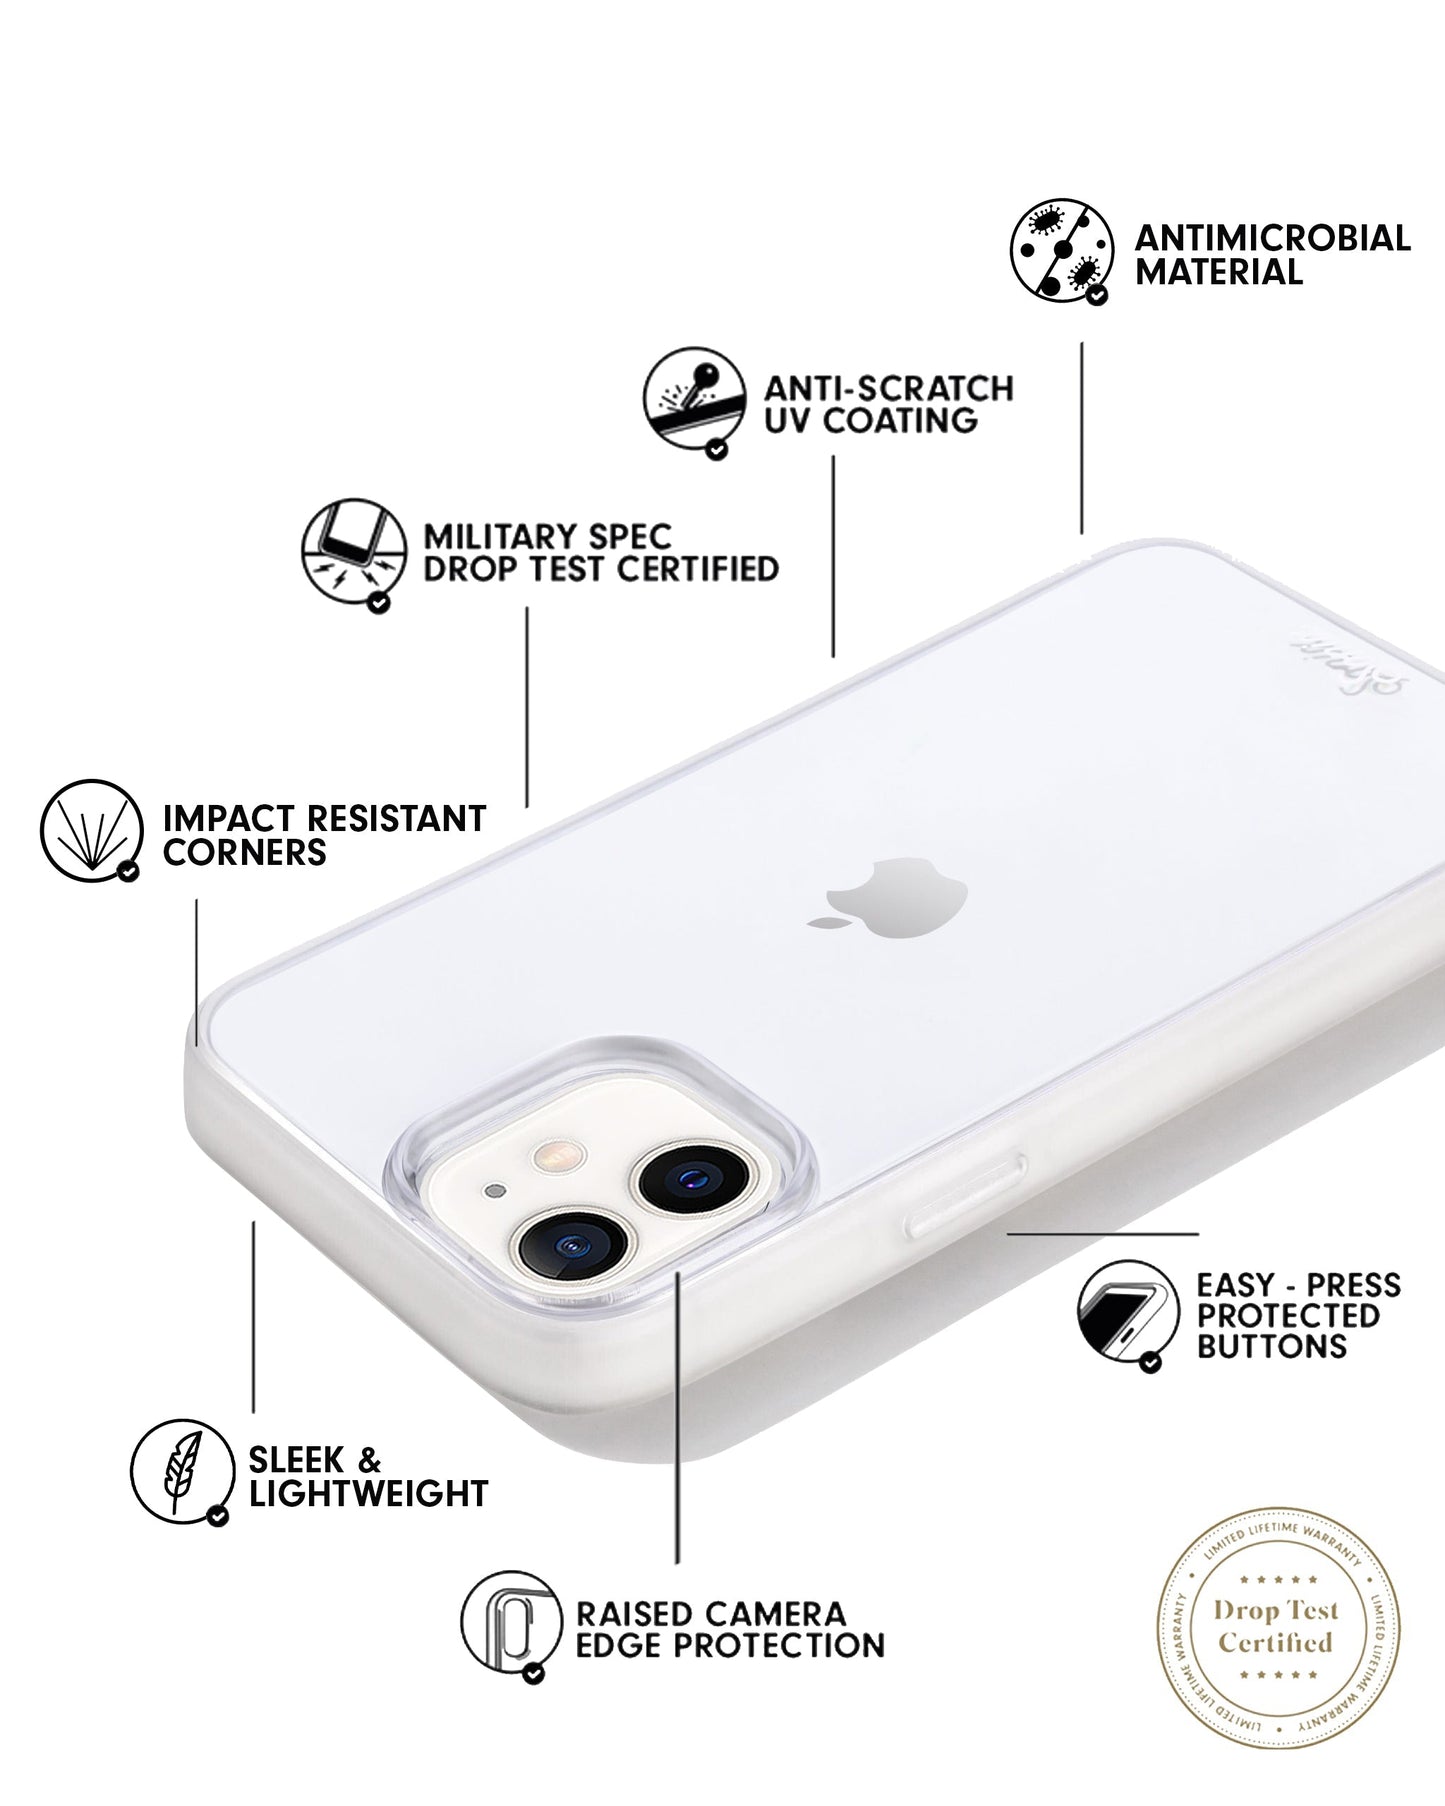 Snake Heart iPhone 11 Pro Case